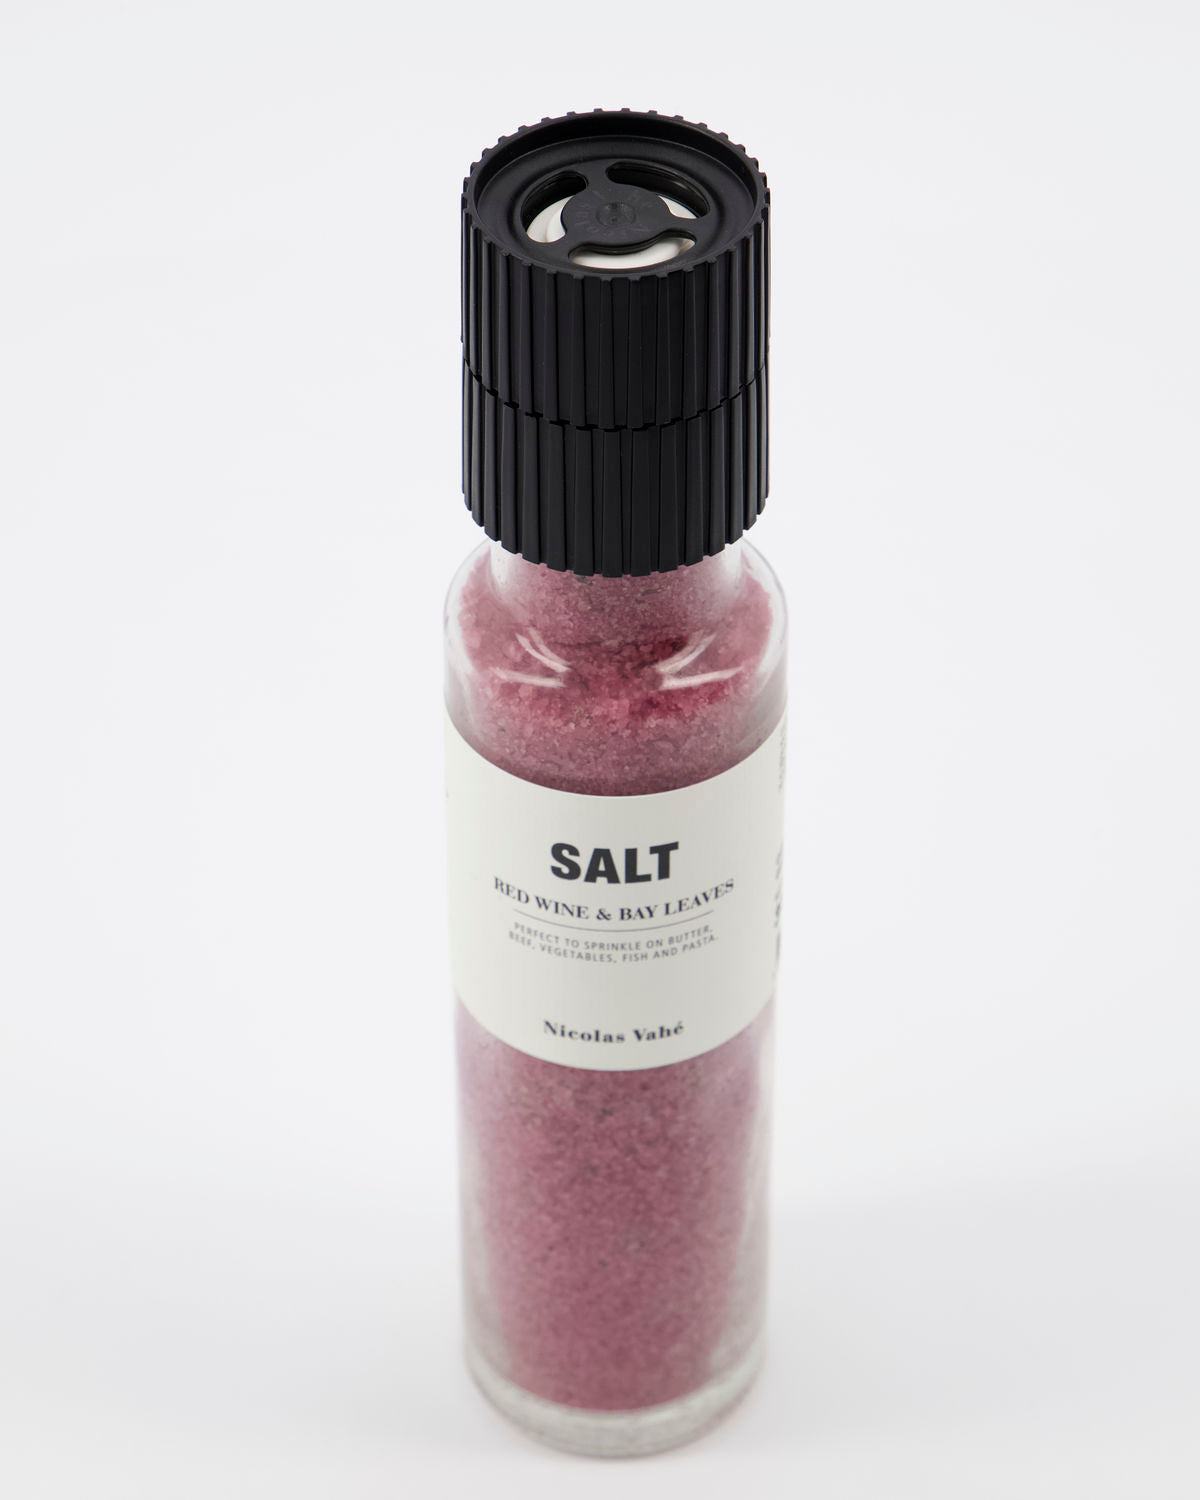 Nicolas Vahé Salt, Redwine + Bay Leaves by Society of Lifestyle